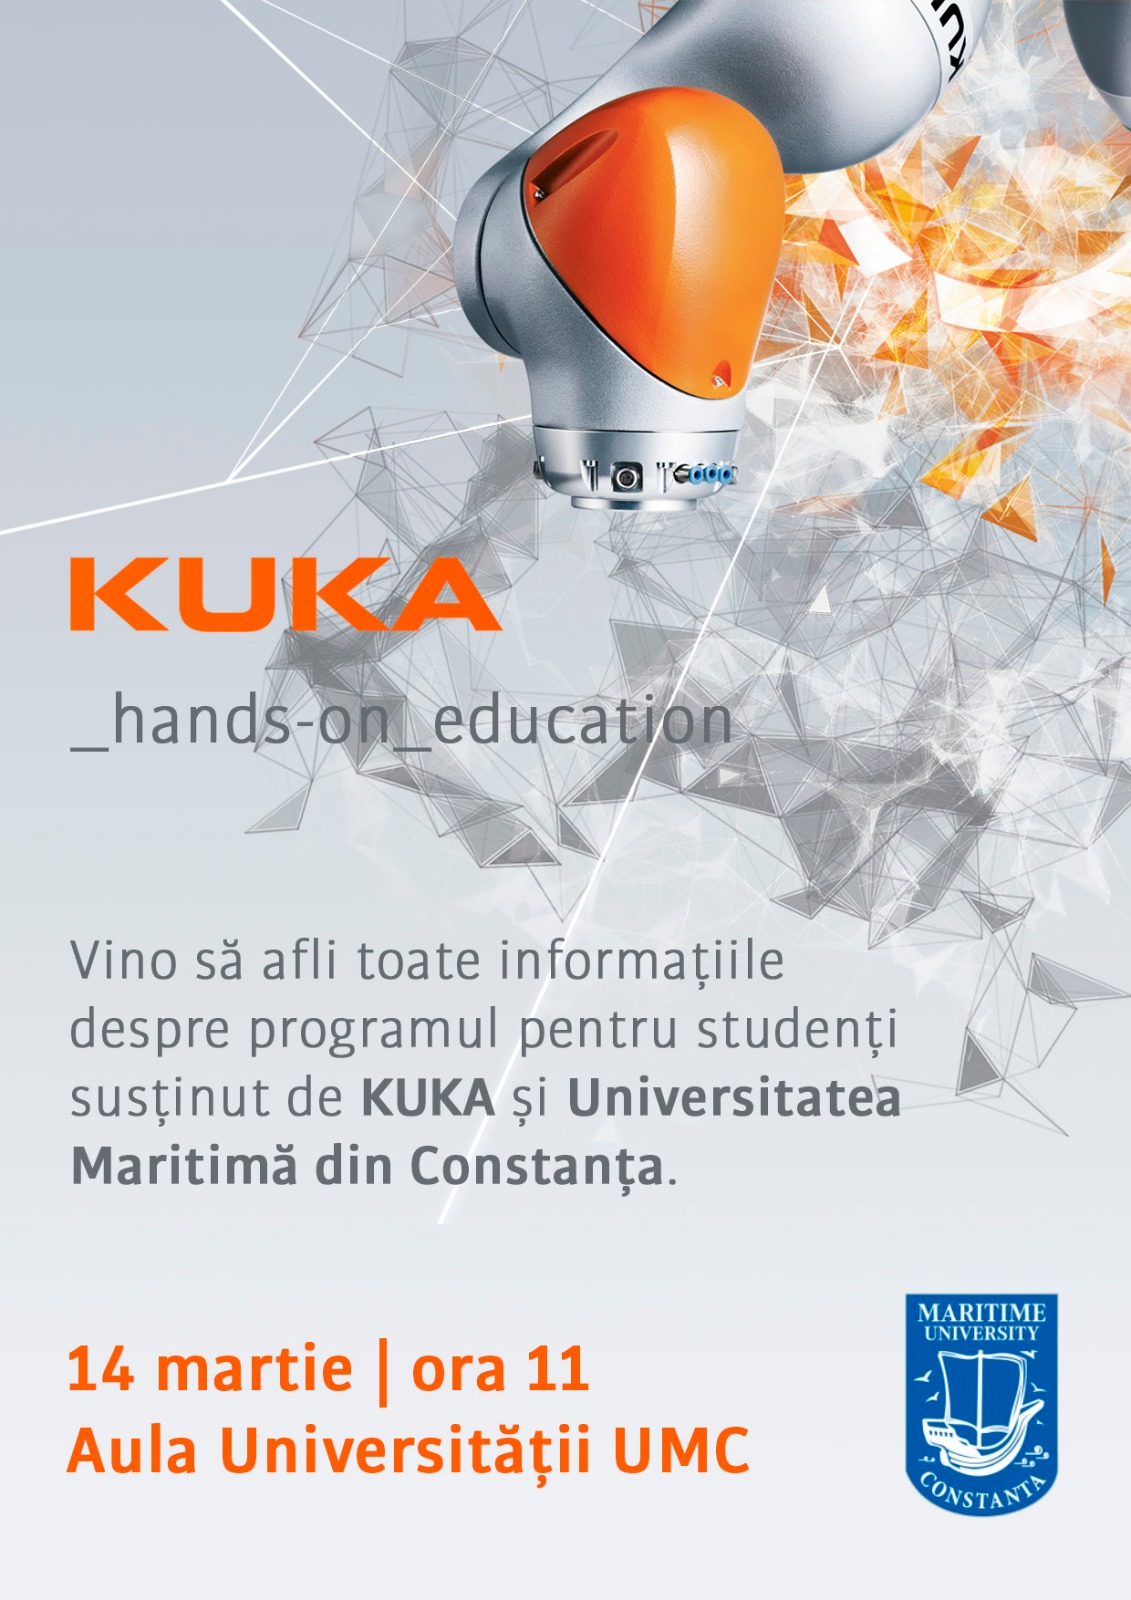 KUKA hands-on education